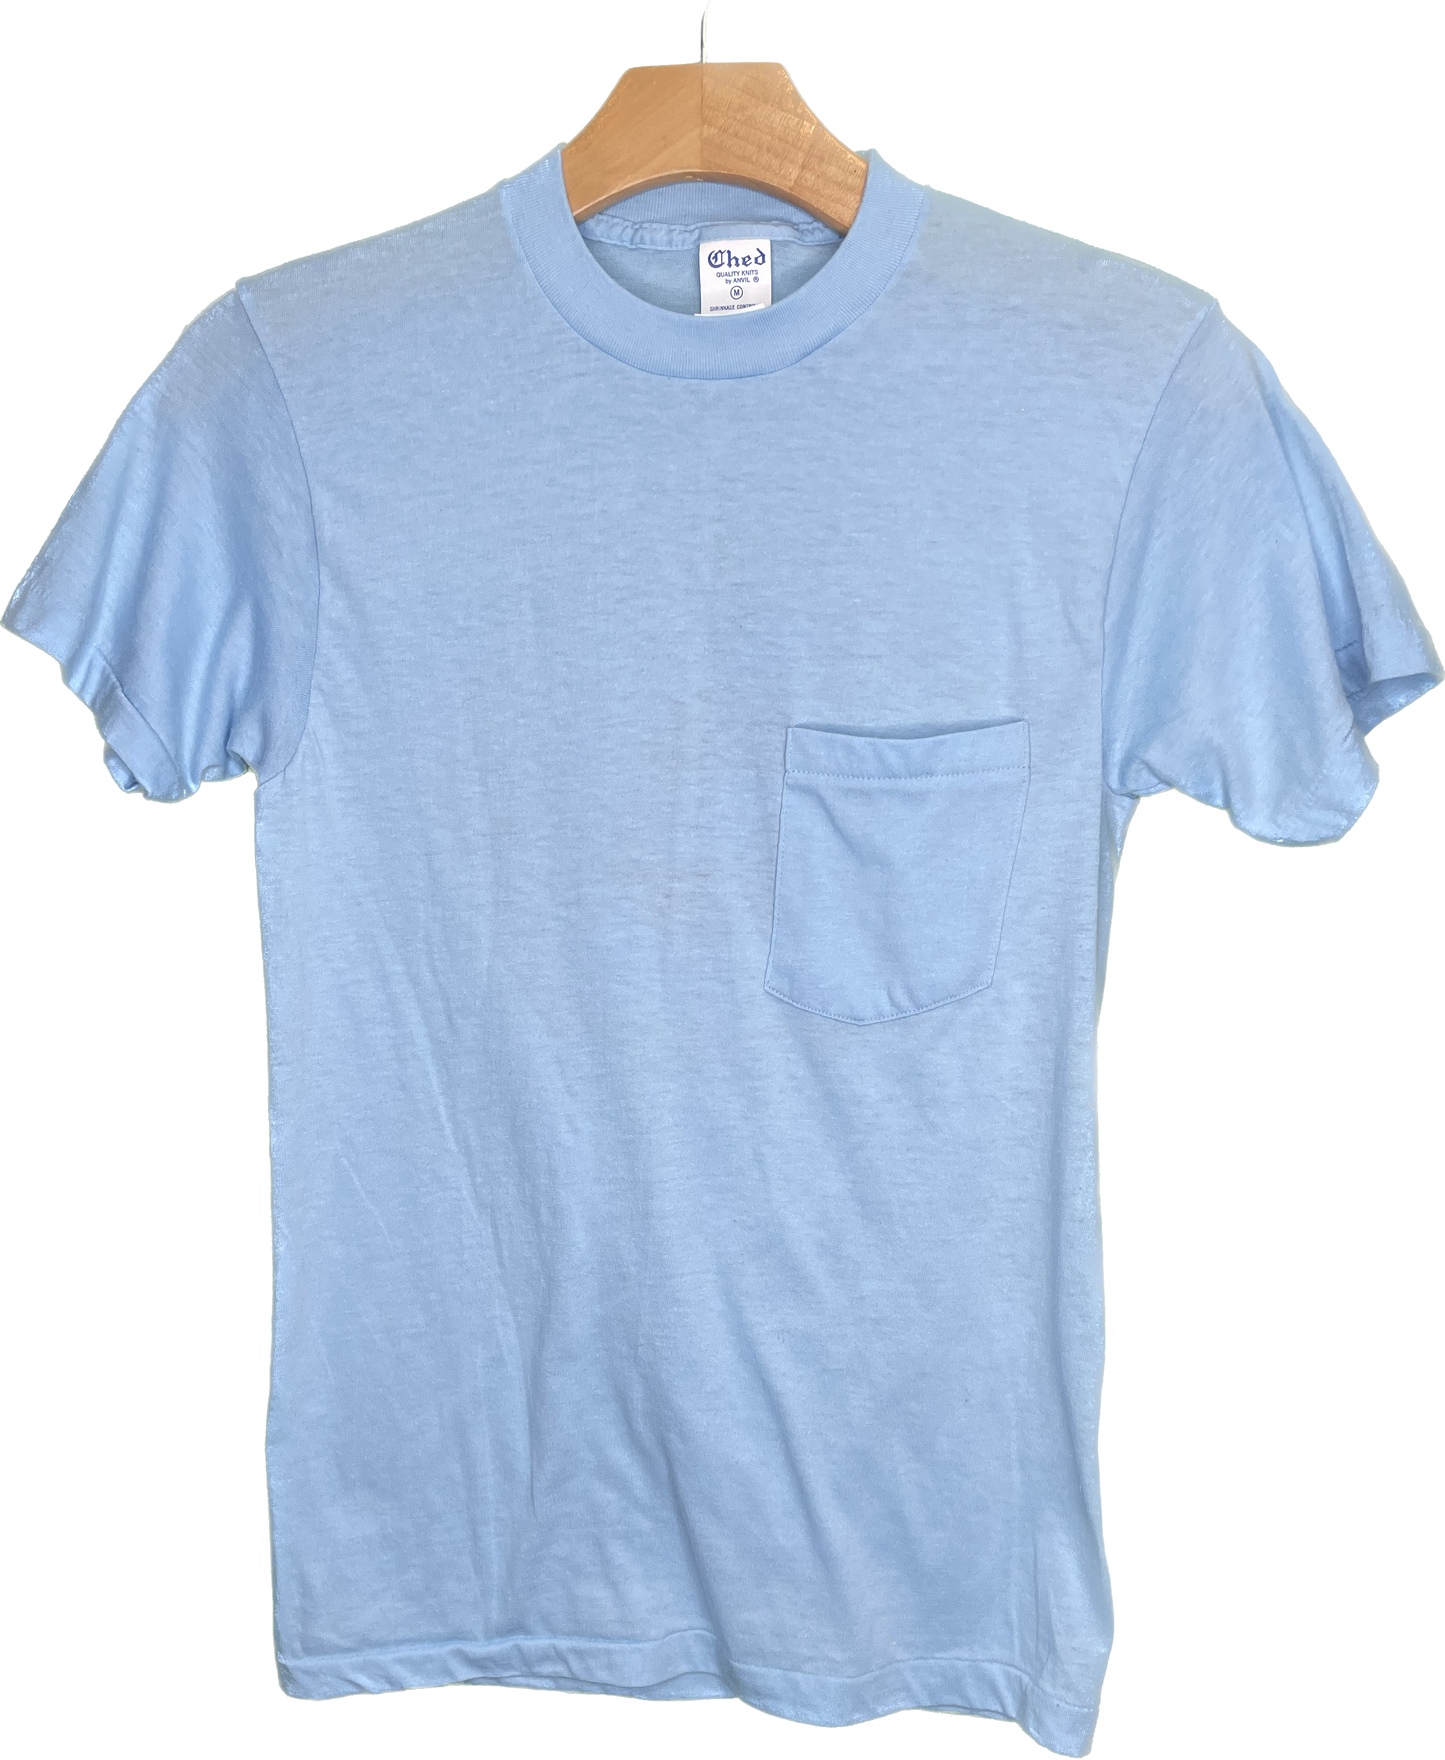 Vintage XS/S Recycle Reduce Rewear Village Vintage Merch Light Blue Pocket T-Shirt